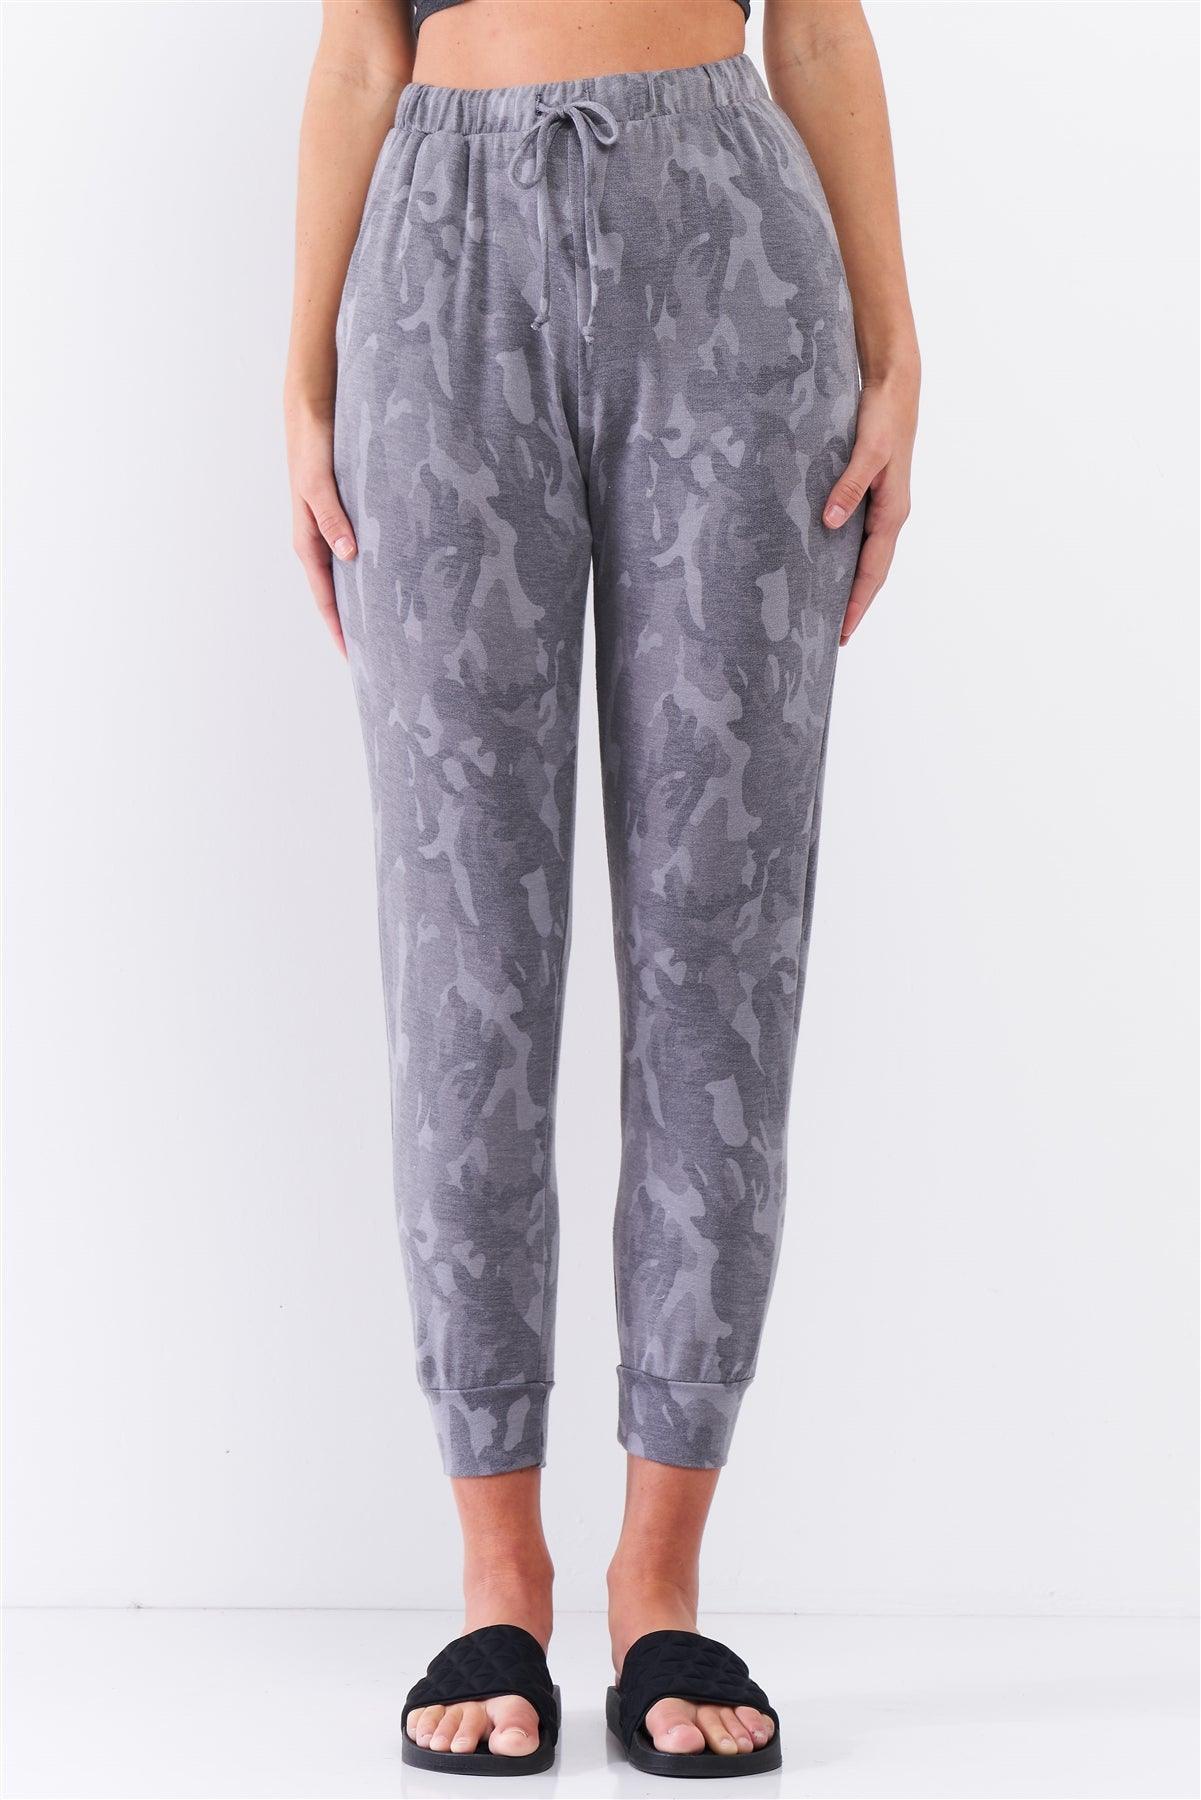 Grey Camo Print Loose Fit High-Waisted Elasticated Self-Tie Drawstring Waistline Track Pants /3-2-1